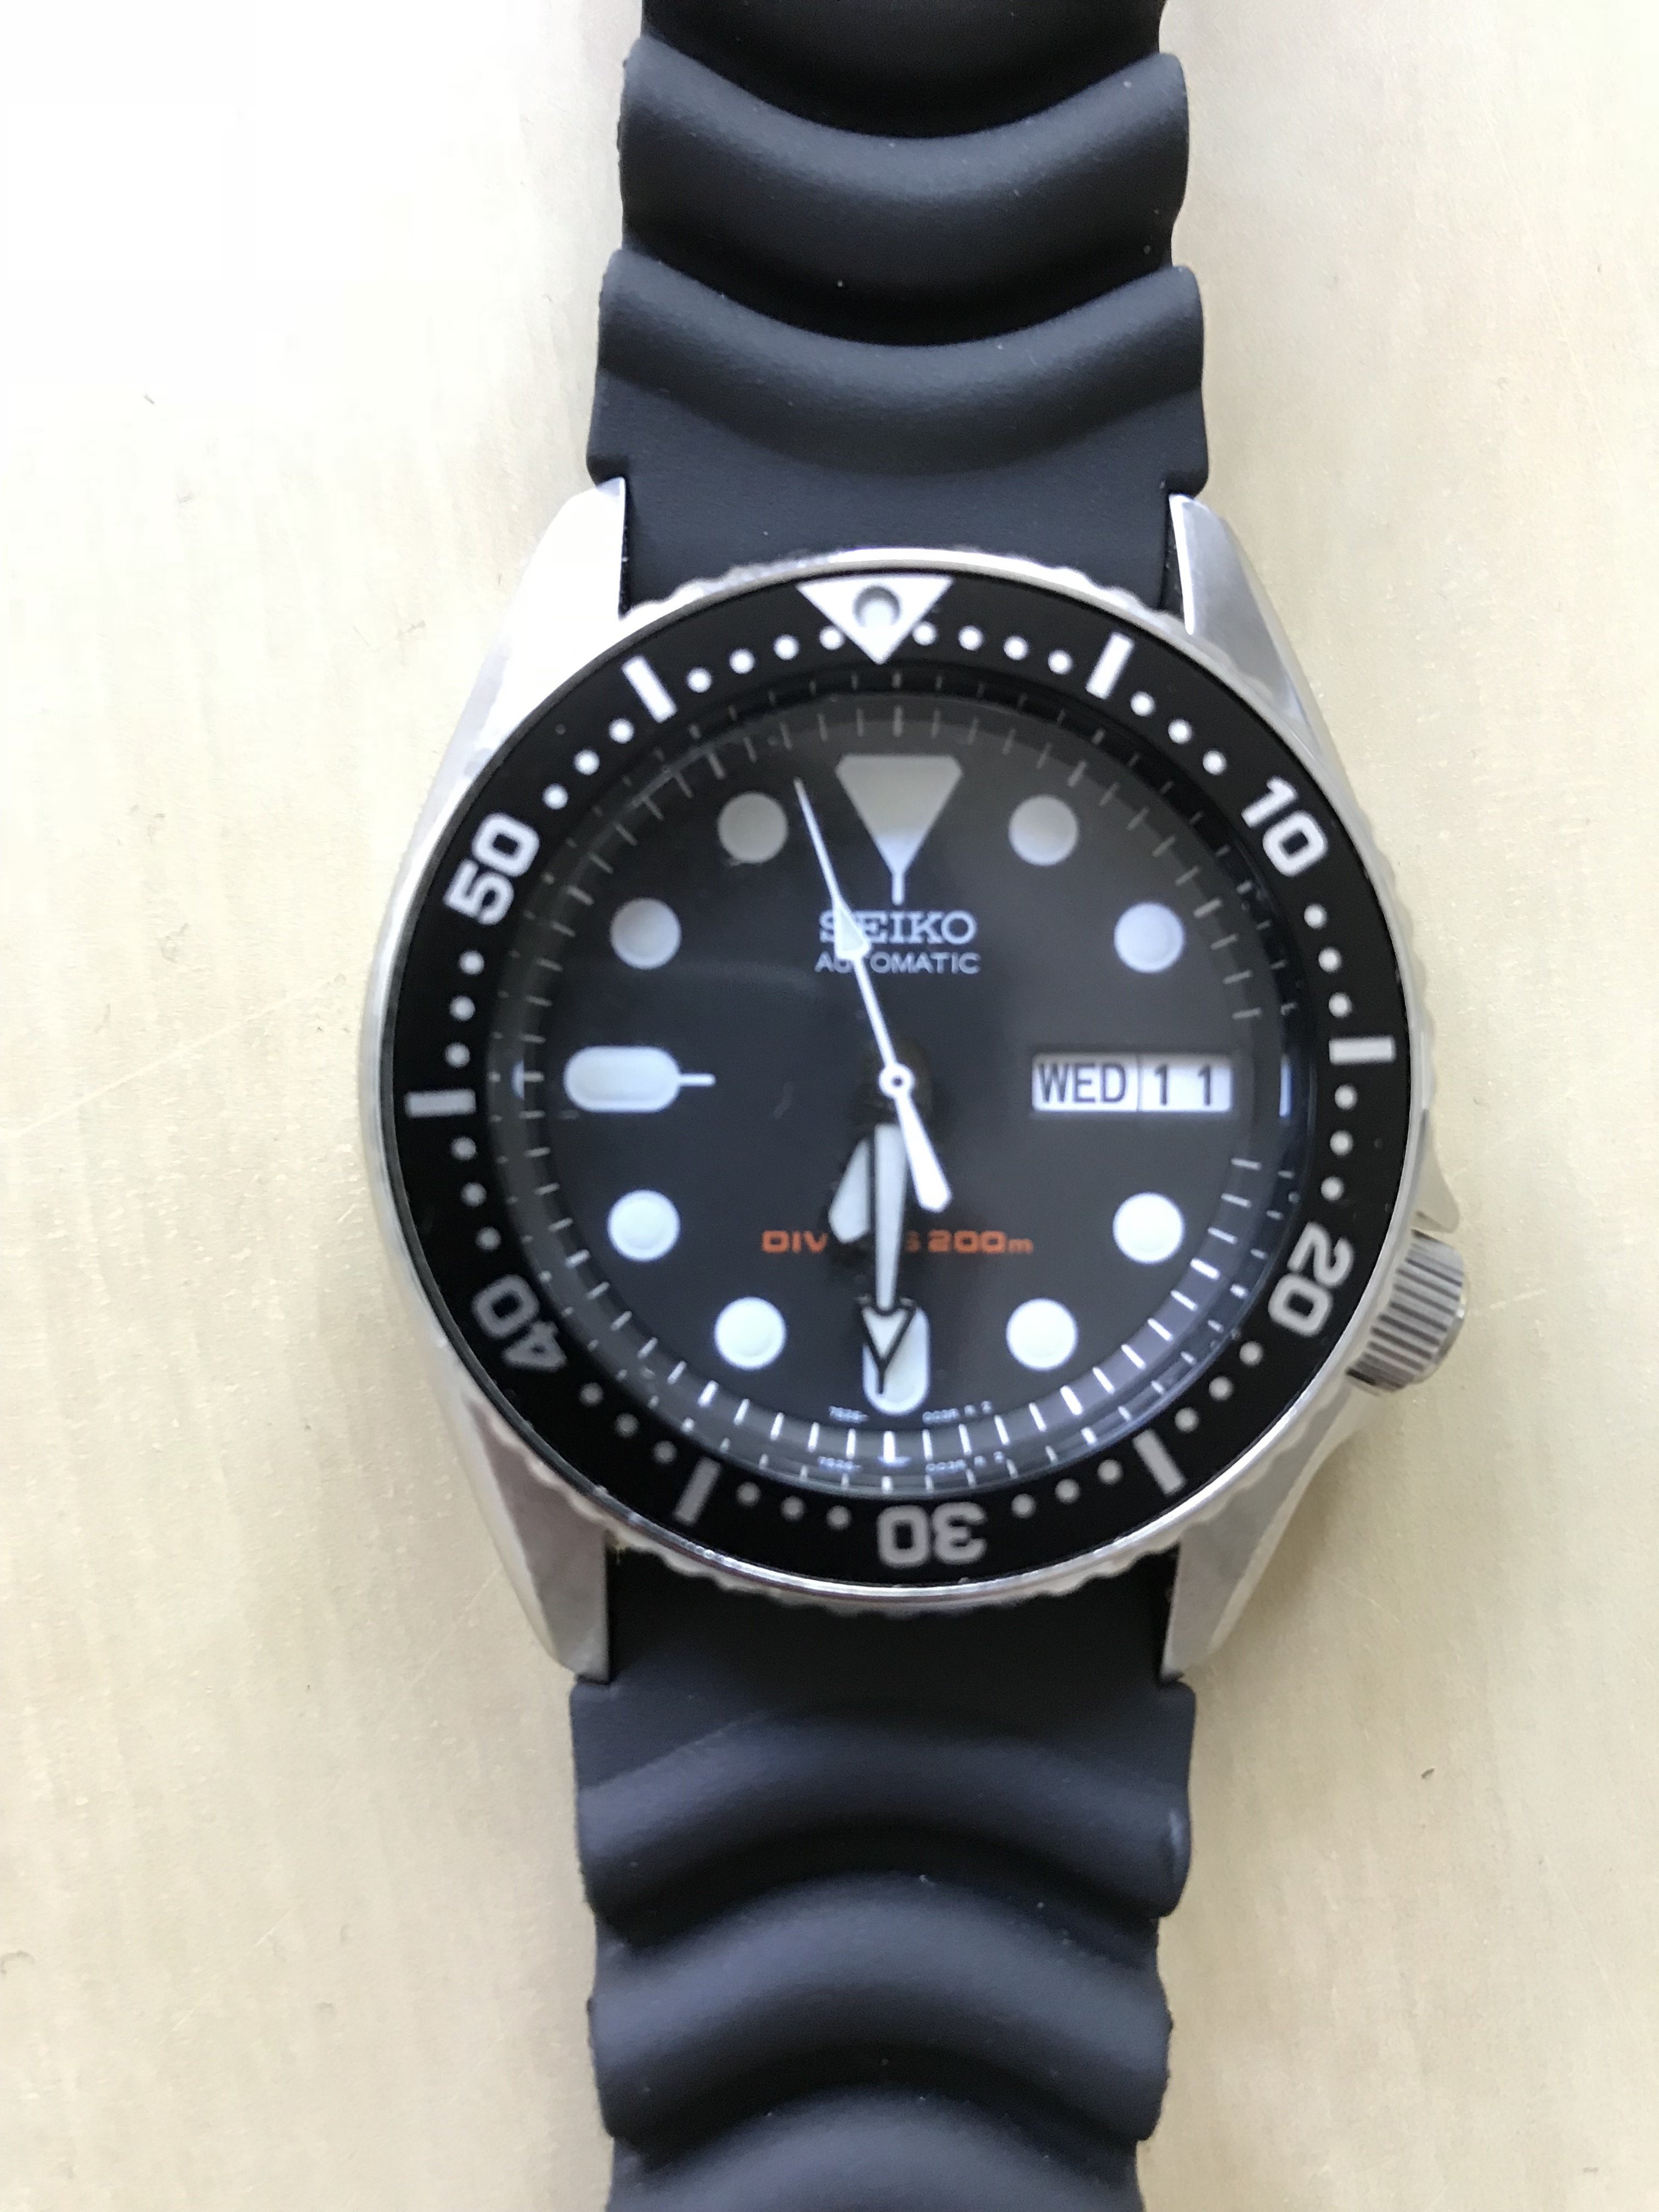 Seiko SKX013 Fake or not? - Algemene Horlogepraat  - het  forum voor liefhebbers van horloges